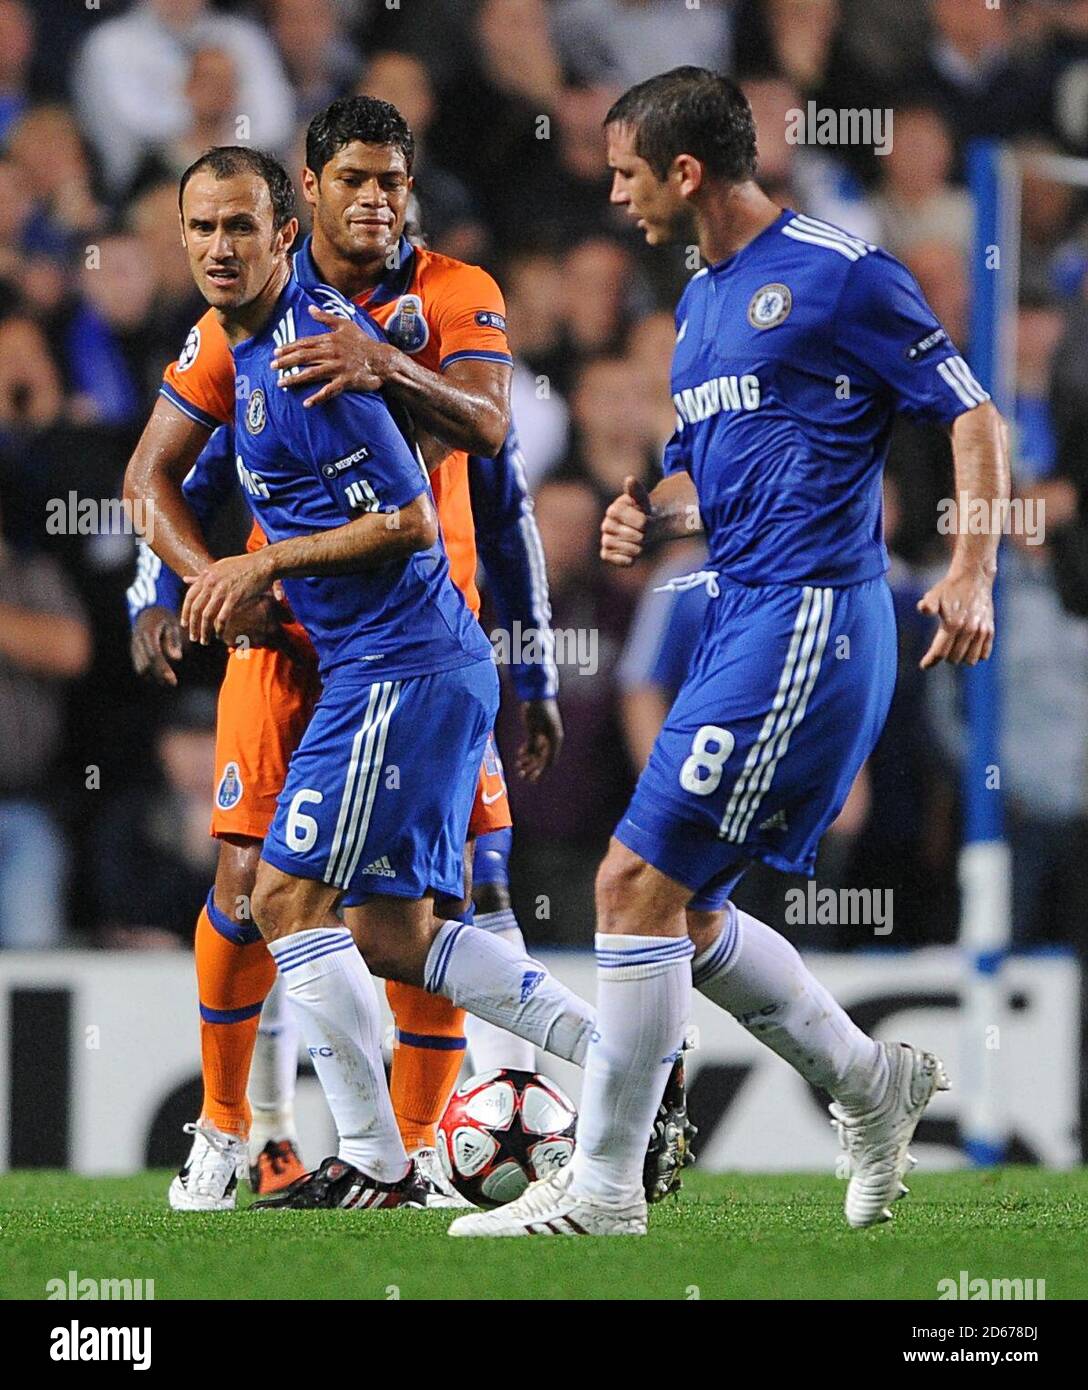 Chelsea's Frank Lampard (right) passes the ball to team mate Ricardo Carvalho (left), who is held back by FC Porto's Givaldinho Hulk. Stock Photo